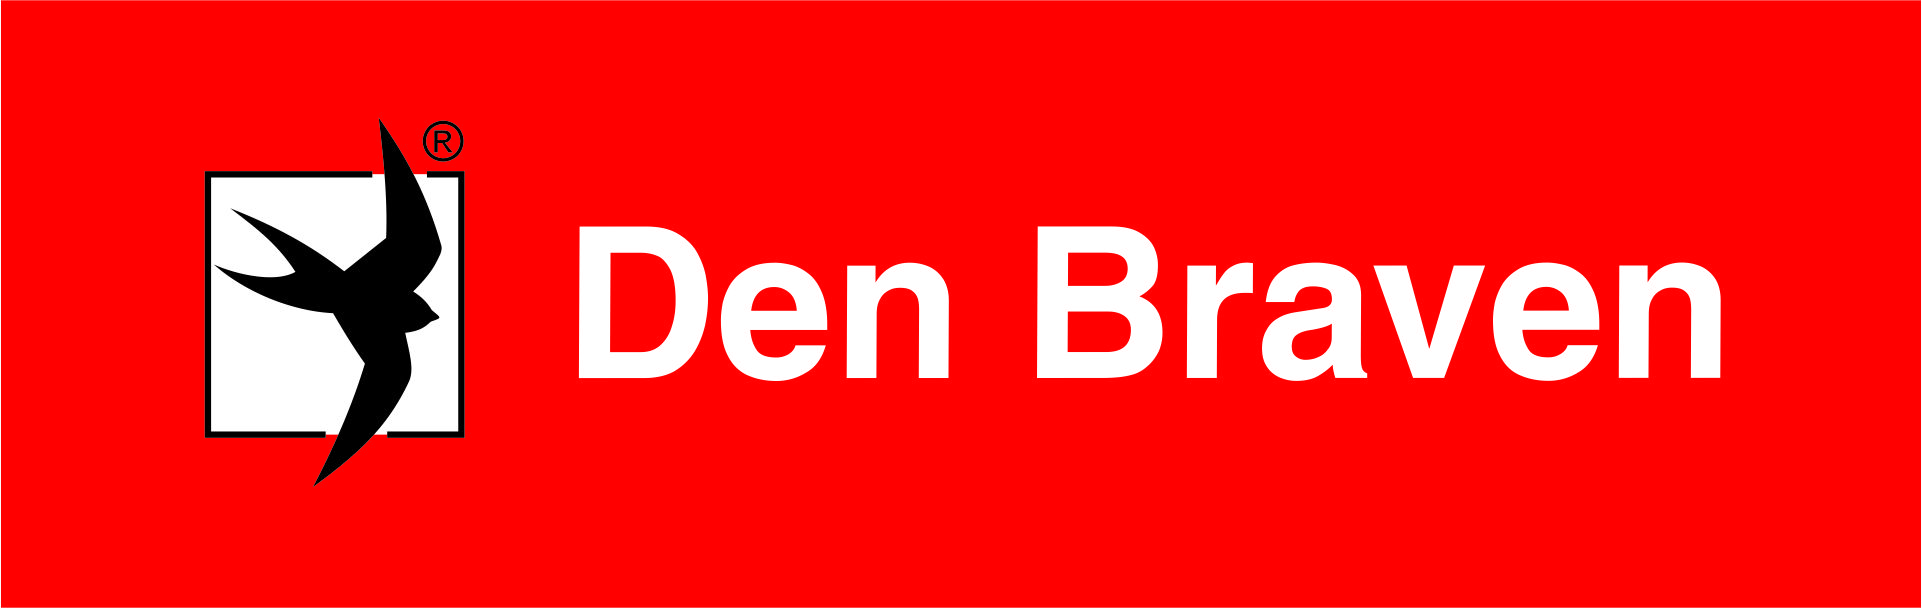 Den-braven-cervene-nasirku-logo-DB